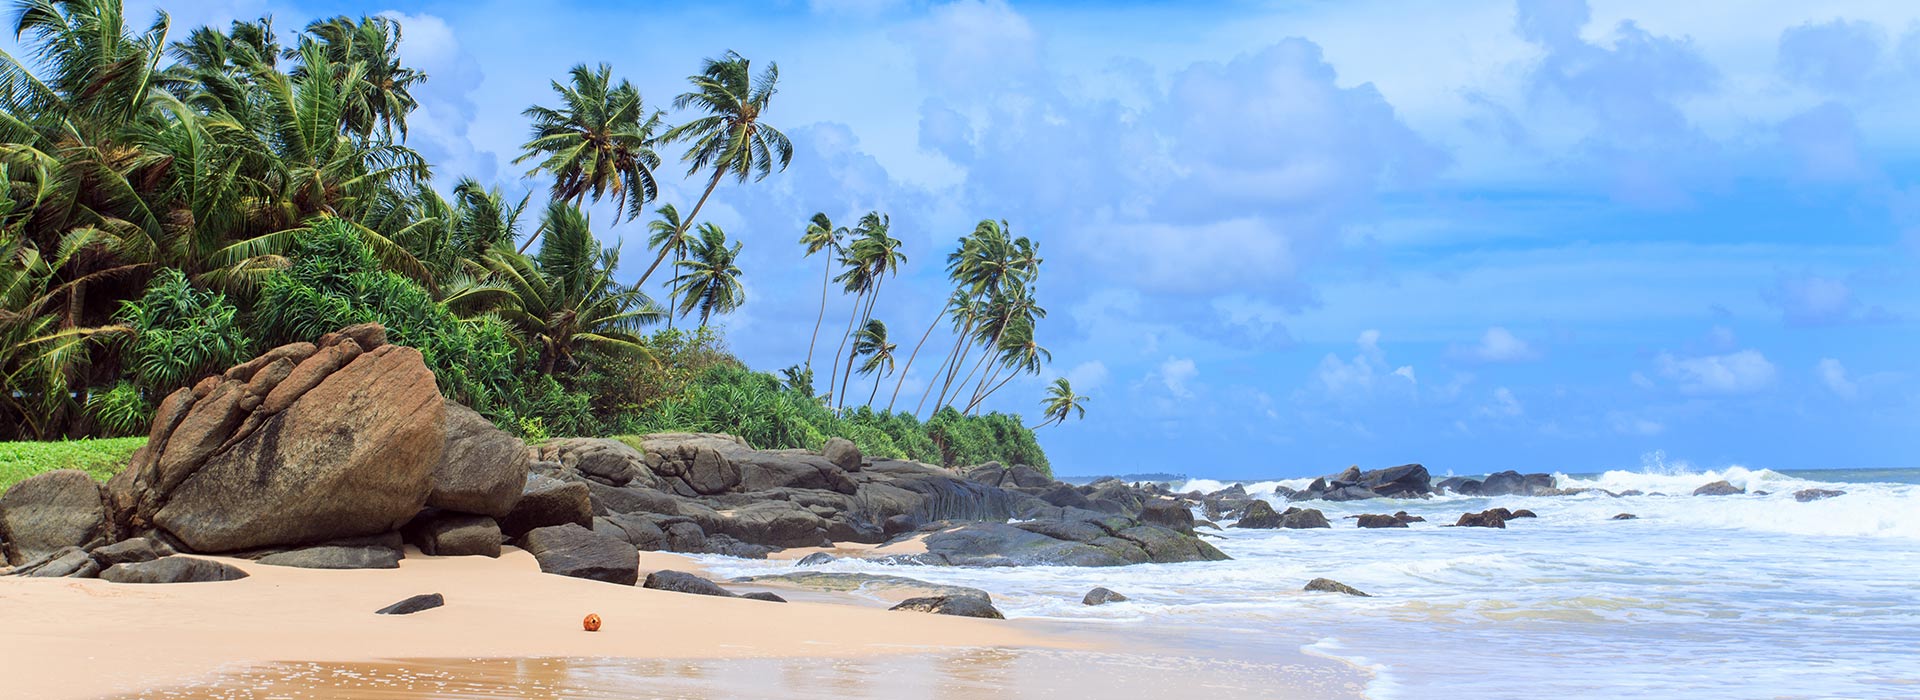 Plan Your Next Adventure in Sri Lanka